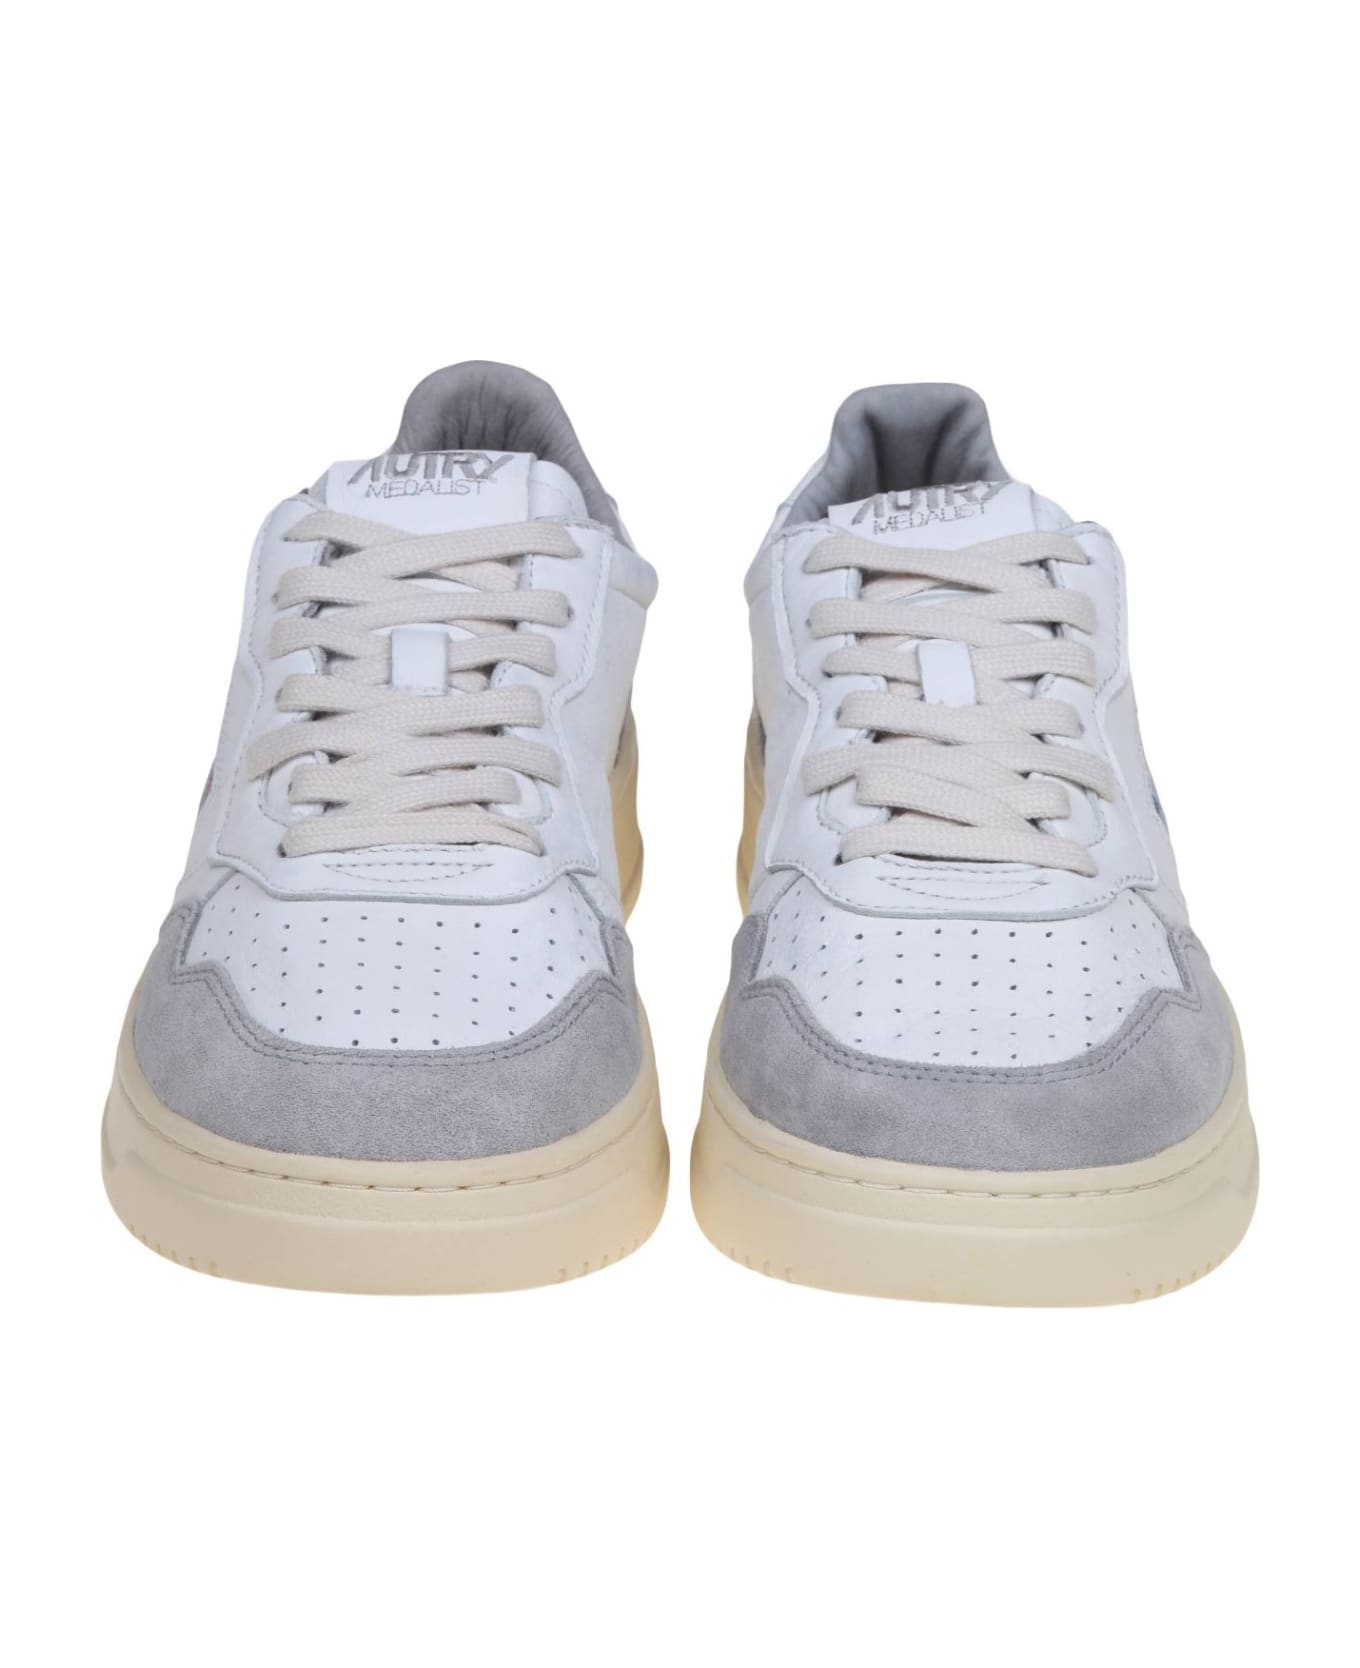 Autry Medialist Low Sneakers - White/Grey